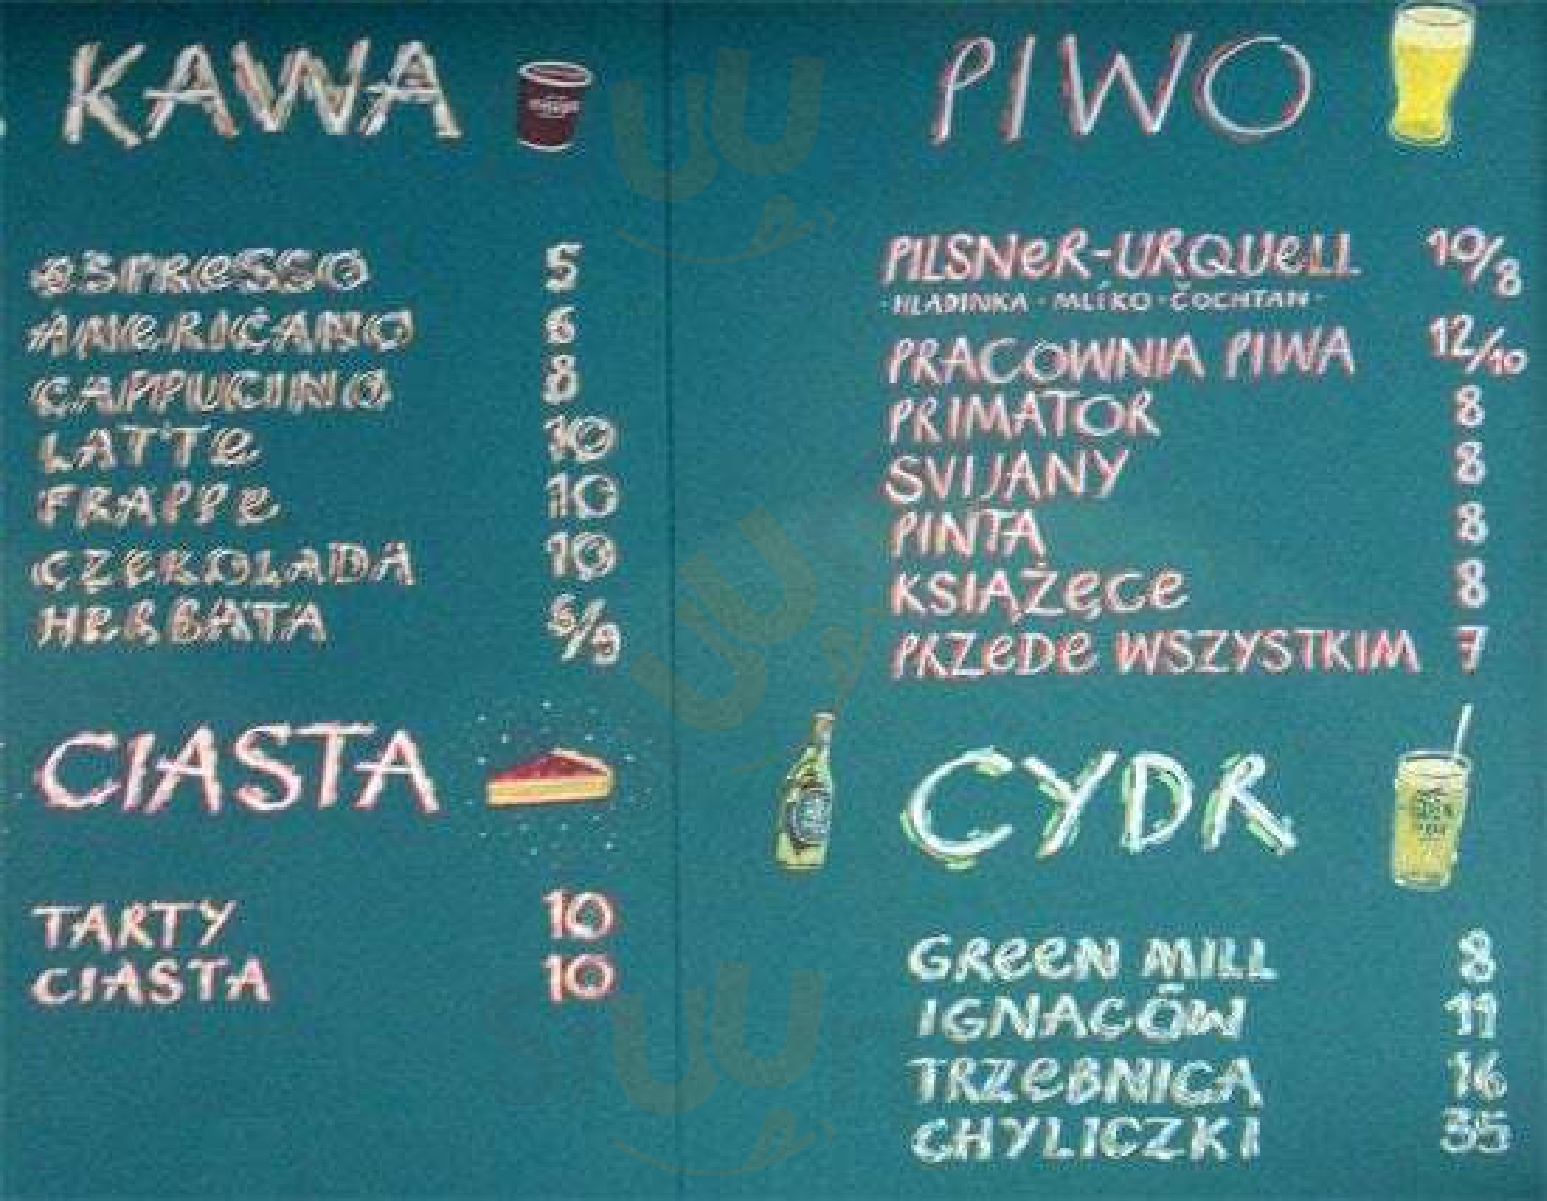 Metaforma Cafe Kraków Menu - 1